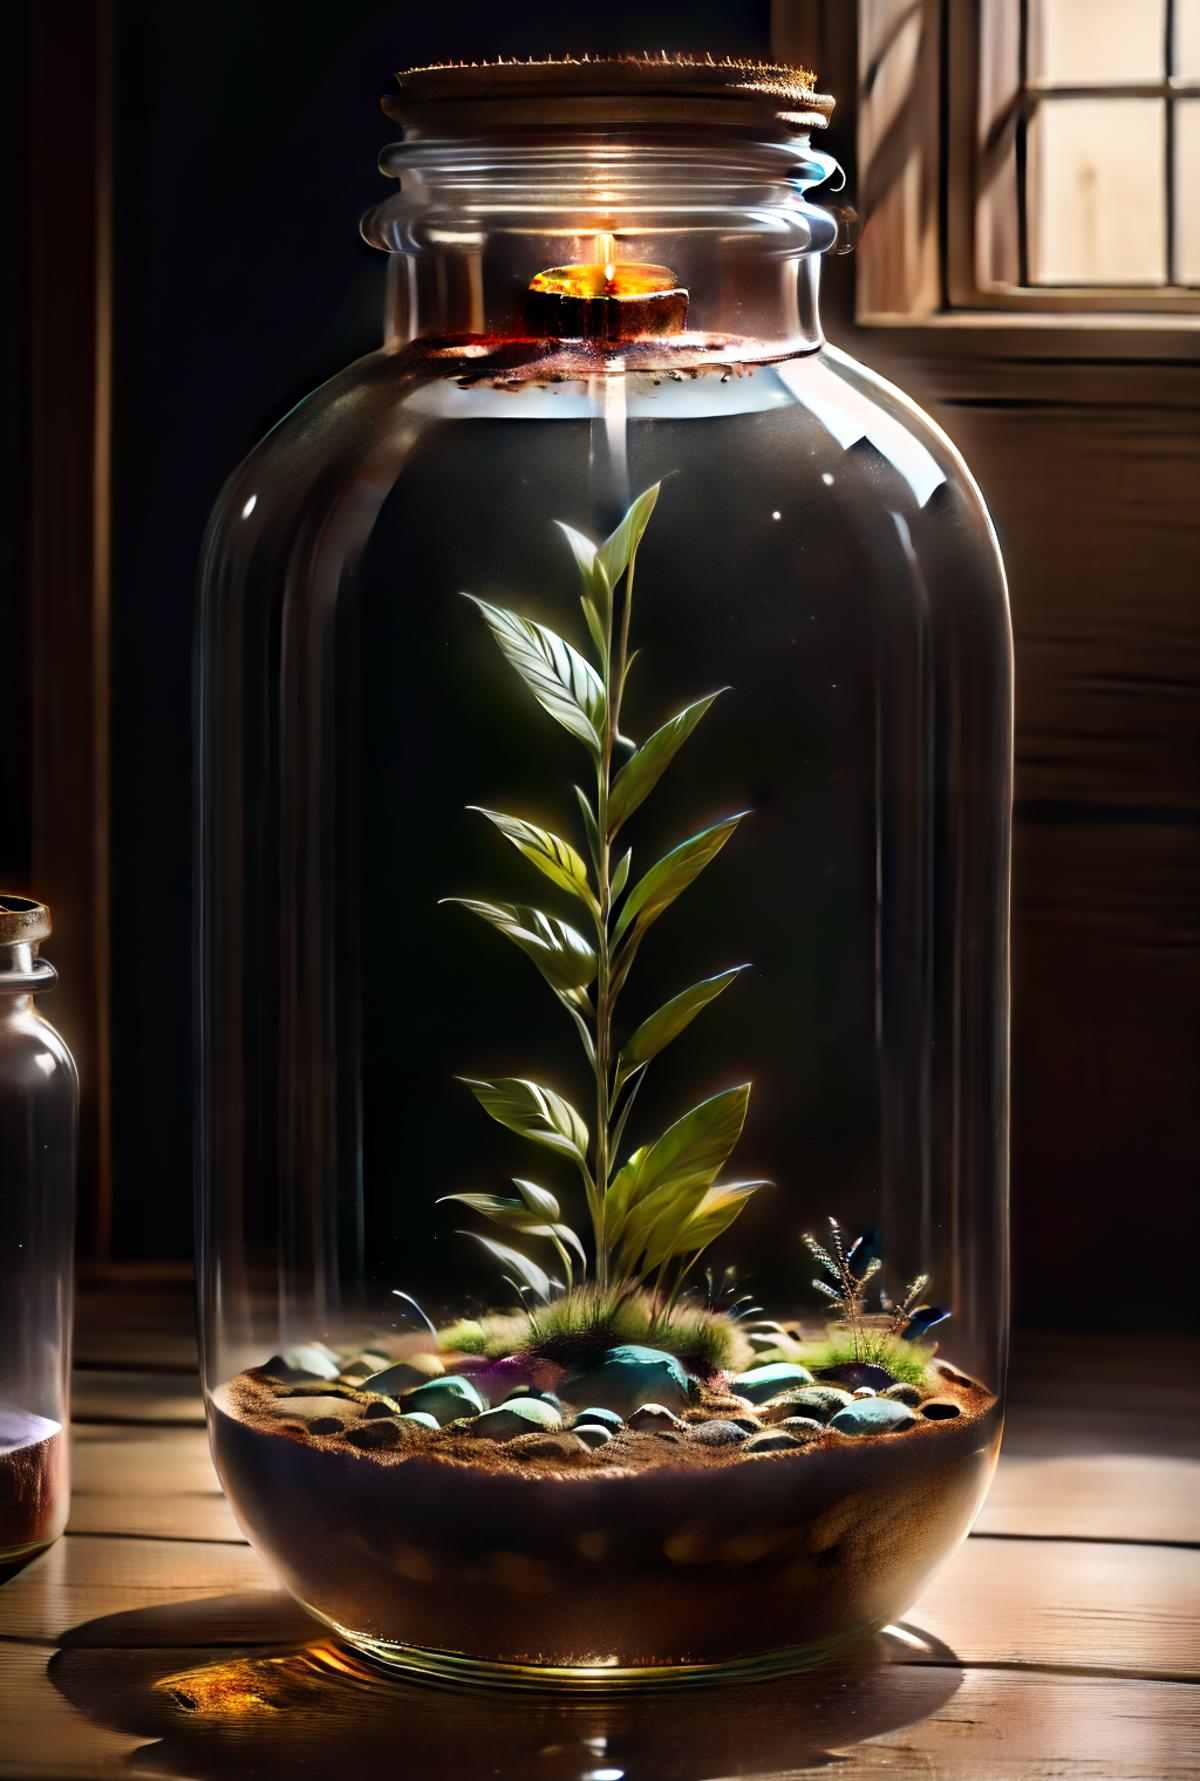 Glass bottle |Concept Glass | Sora image by fansay